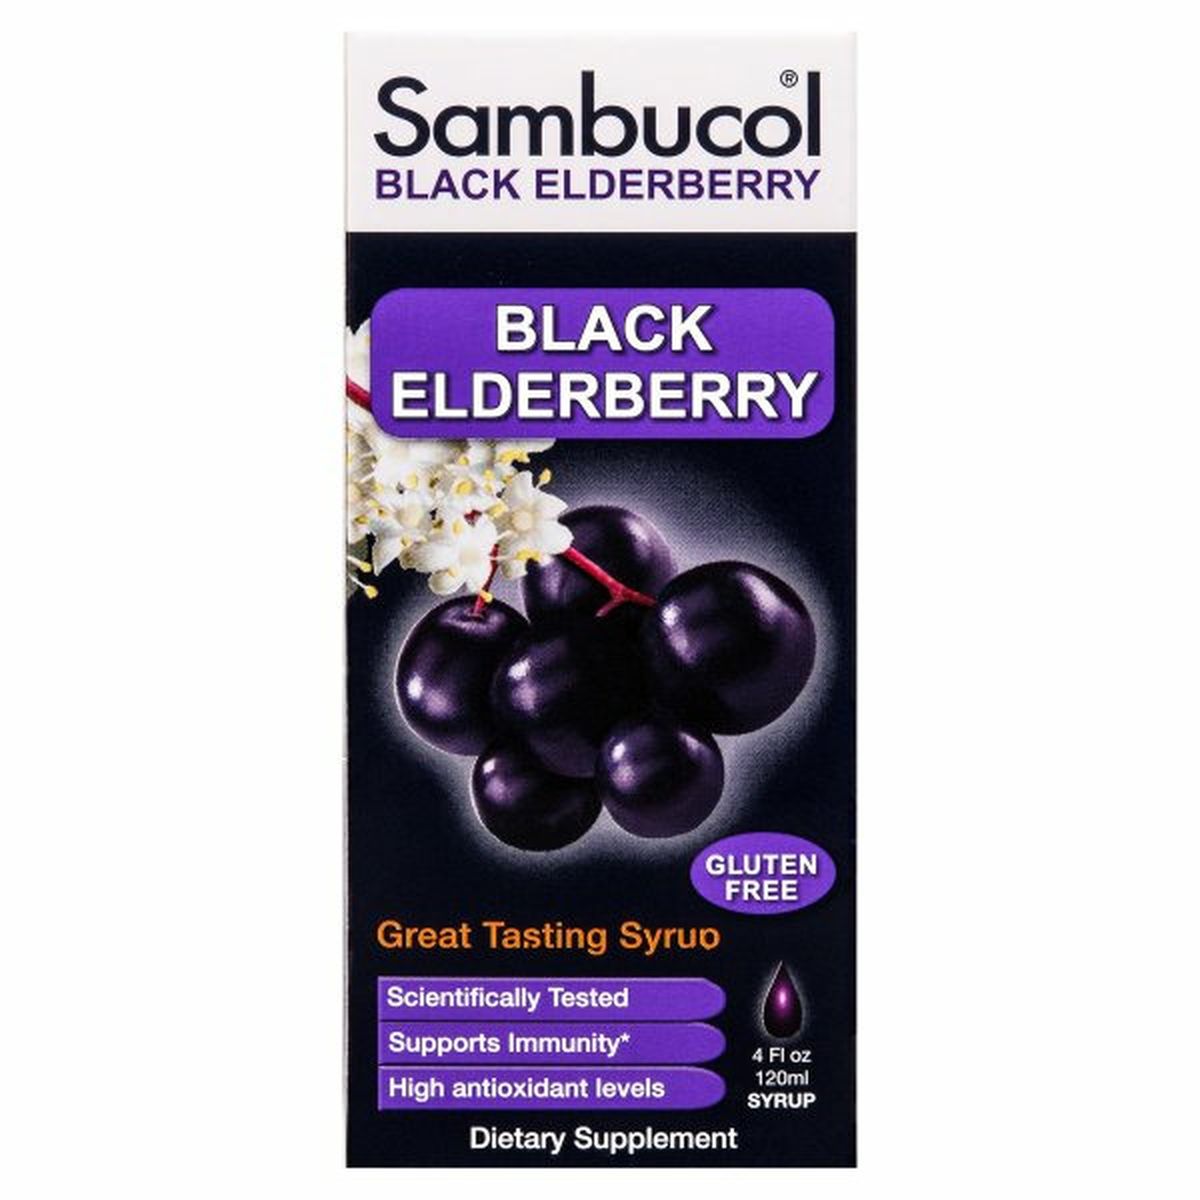 Calories in Sambucol Black Elderberry, Syrup